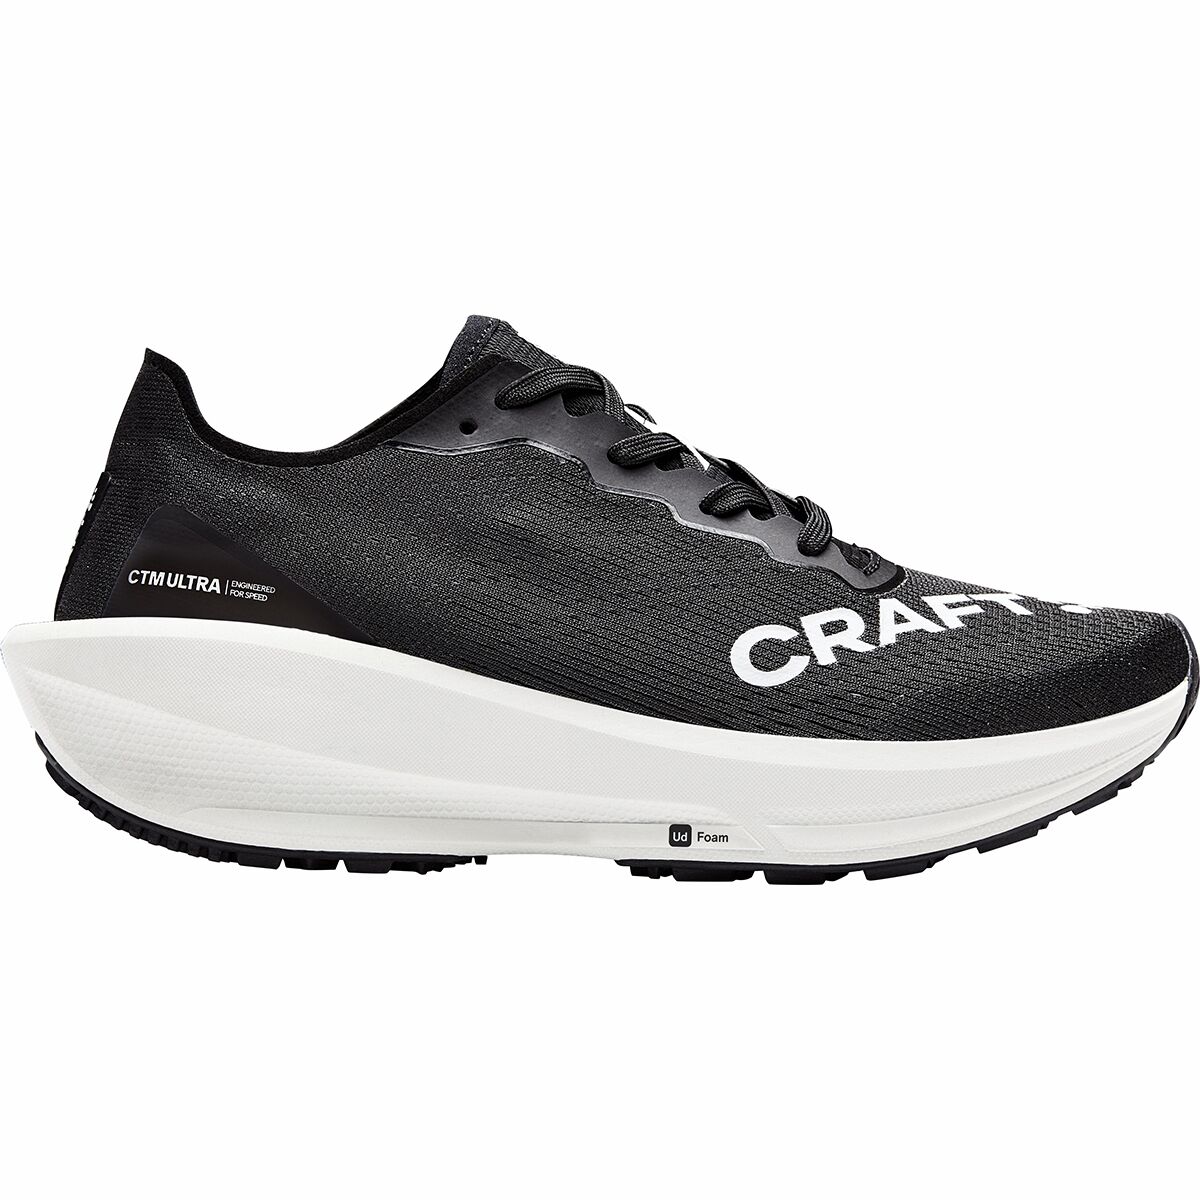 Craft CTM Ultra 2 Running Shoe - Women's